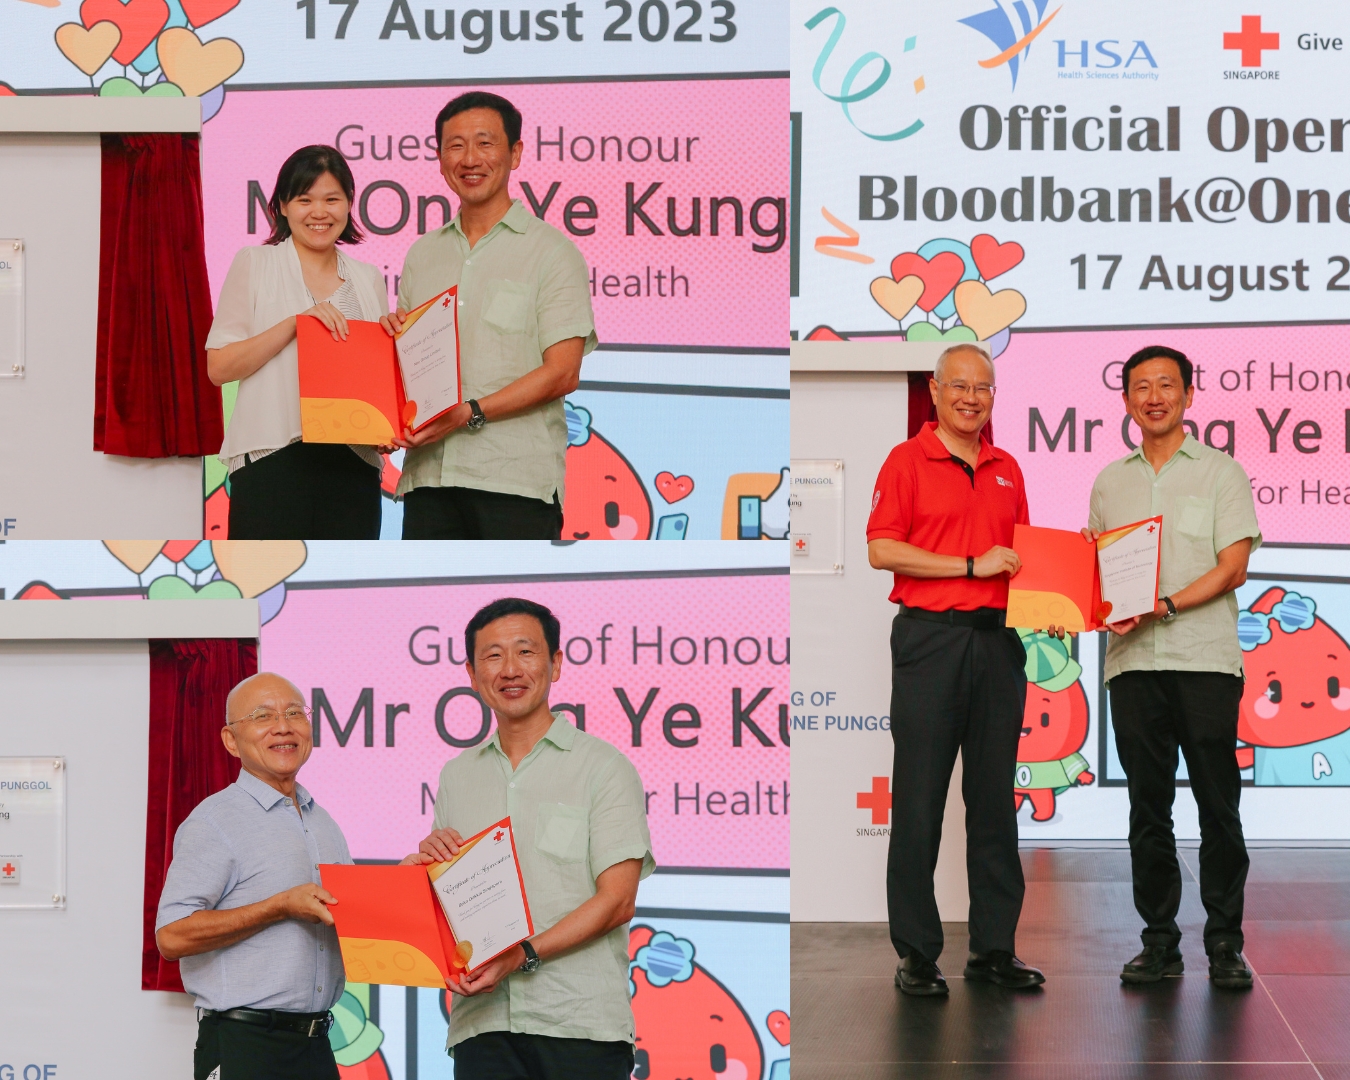 Bloodbank One Punggol Opening 17 Aug 23 Adopt a Bloodbank